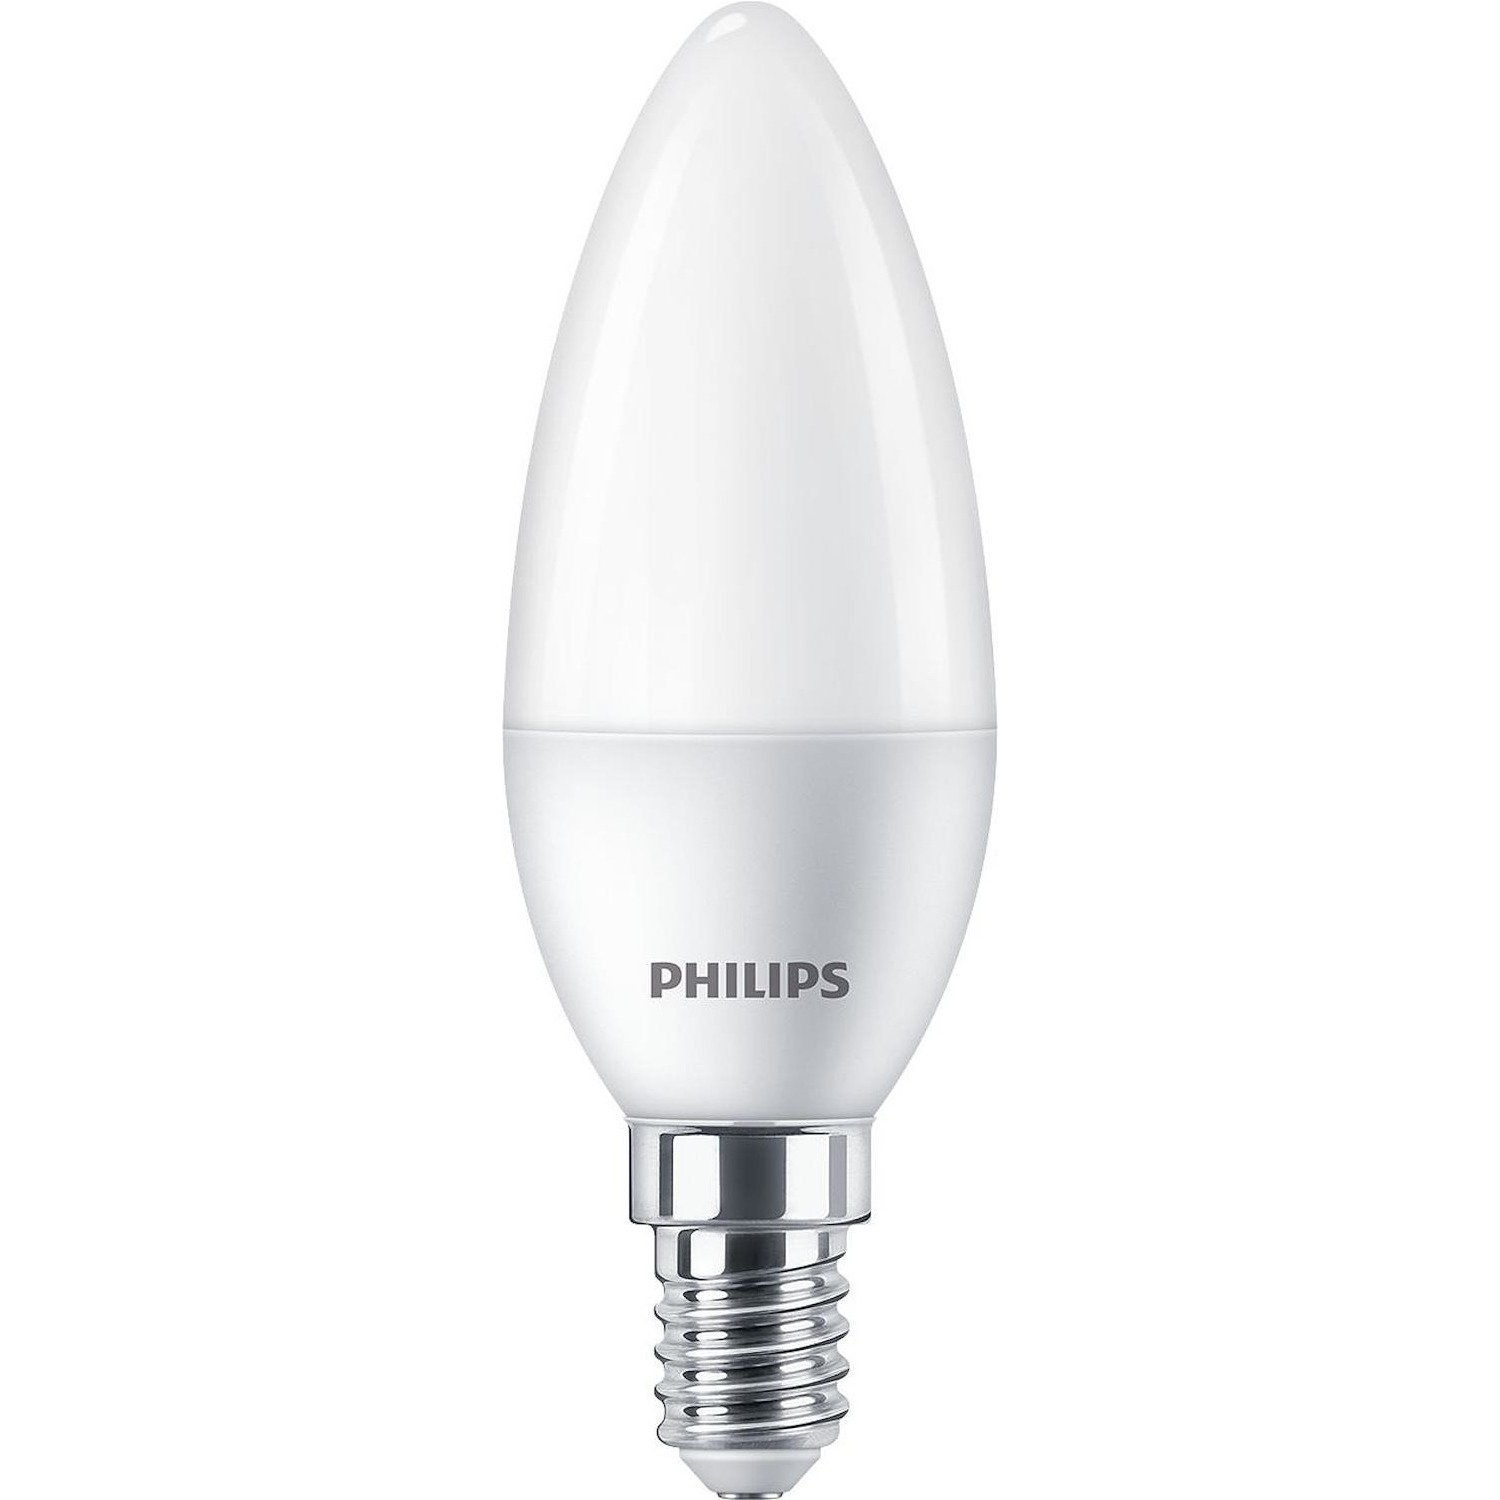 Immagine per Lampadina Philips candela 40W E14 2700K  4pz da DIMOStore